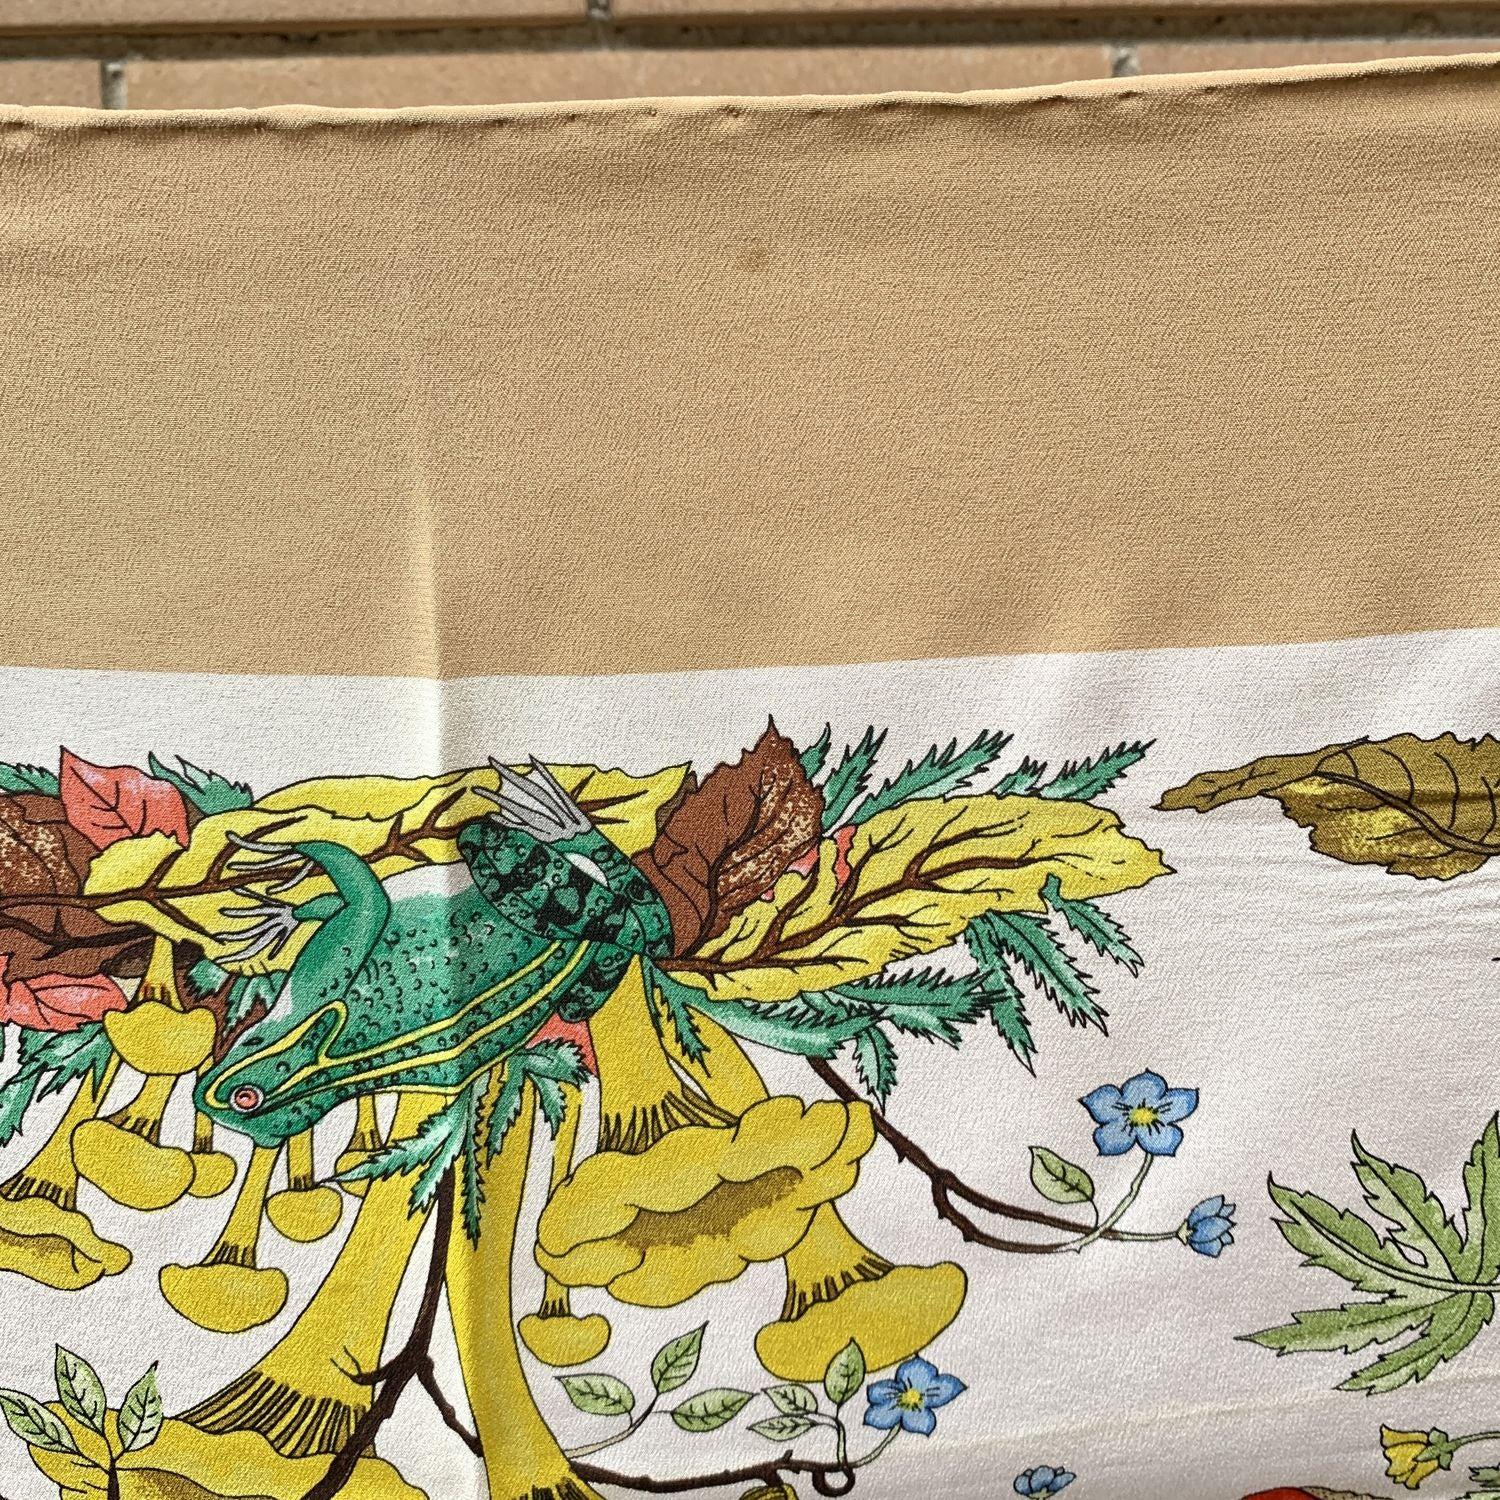 Gucci Vintage Beige Floral 'Funghi' (Mushrooms) Silk Scarf. Designed by Vittorio Accornero for GUCCI in 1967. Multicolor flowers and mushrooms design. Beige borders. 100% Silk. Measurements: 34.5 x 34.5 inches - 87,5 x 87,5 cm. Printed GUCCI